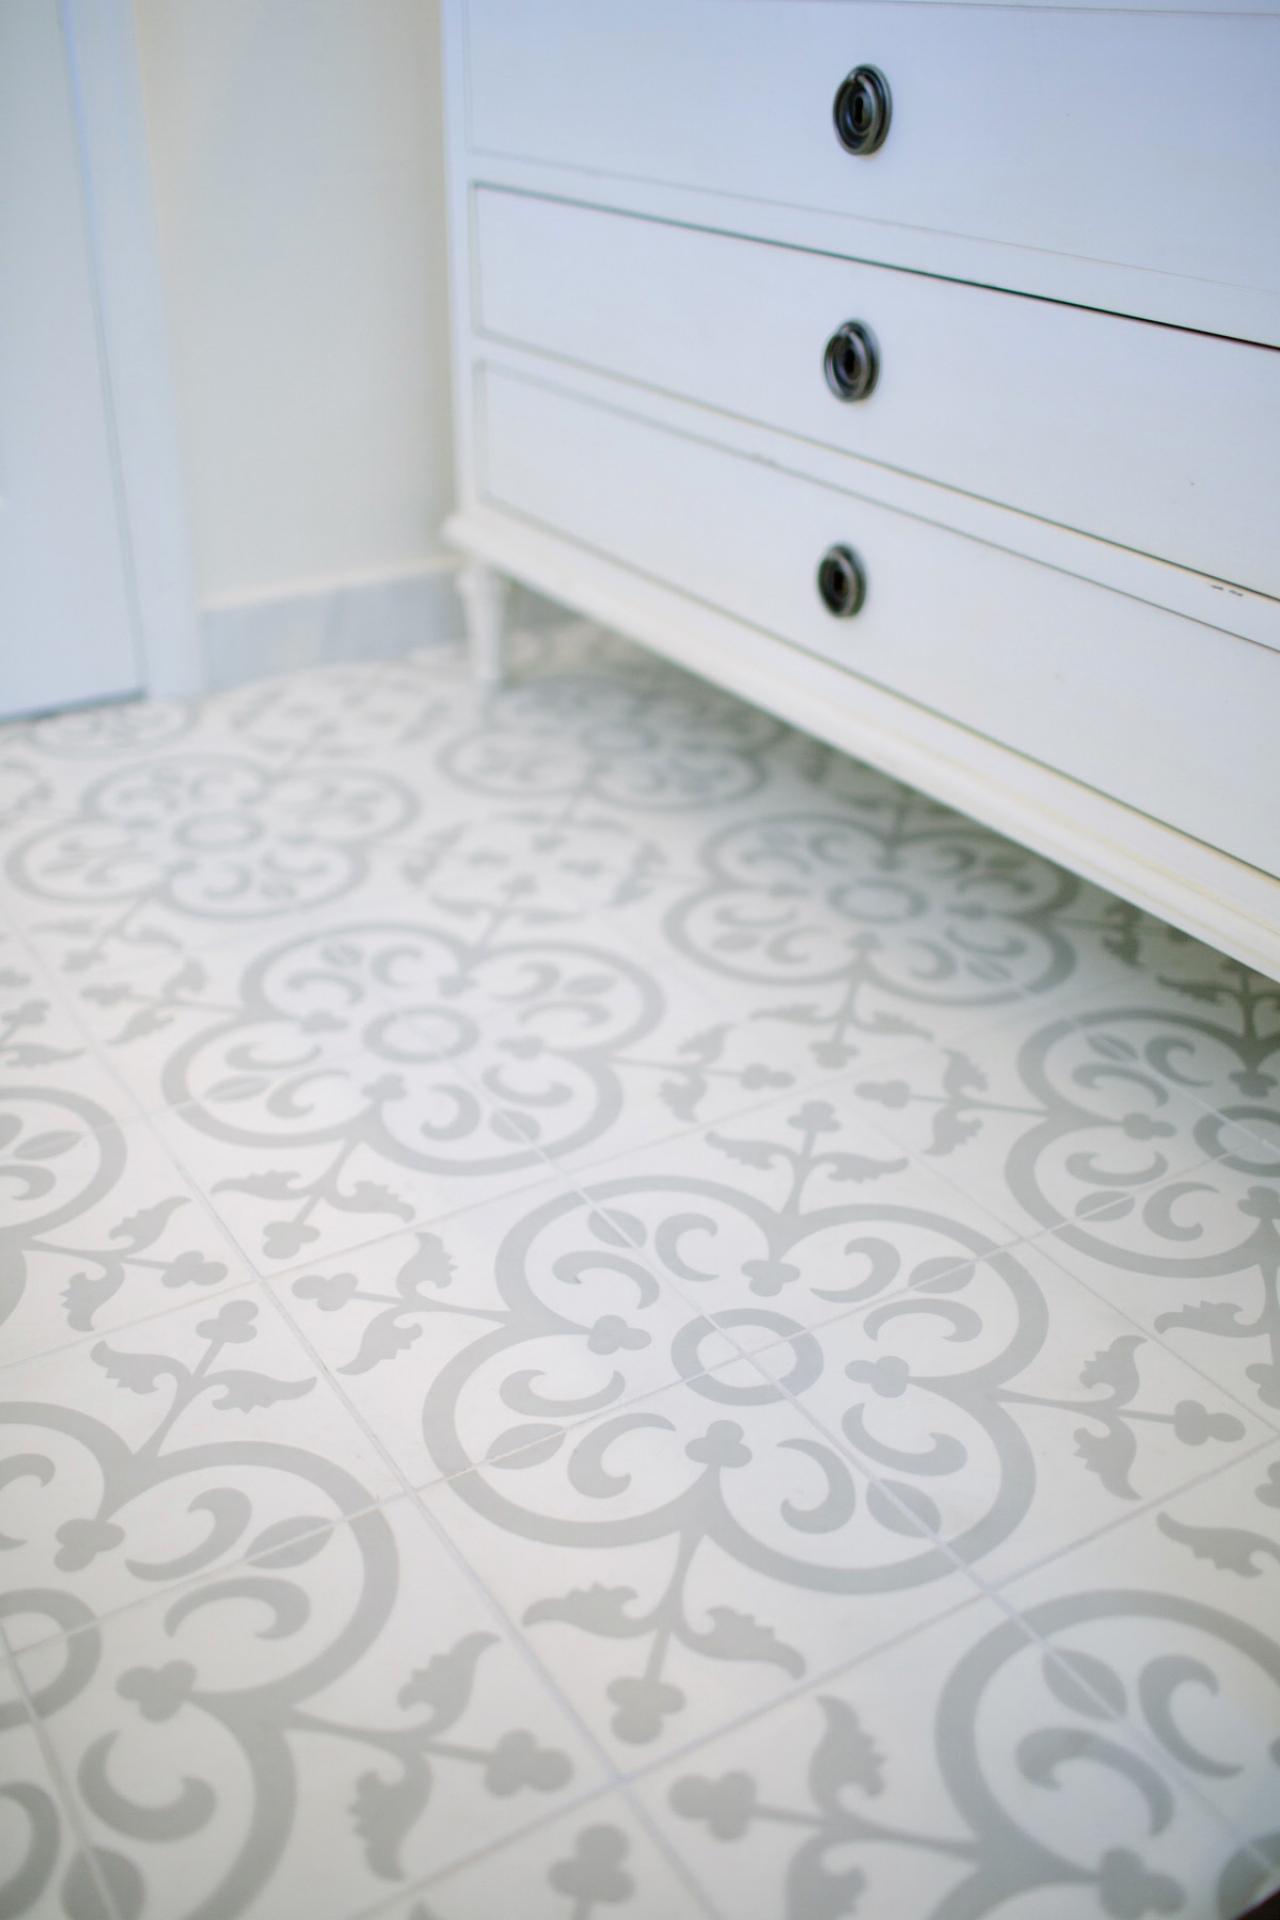 Average Cost To Install Tile Floor, Ceramic Tile Flooring Cost Per Square Foot